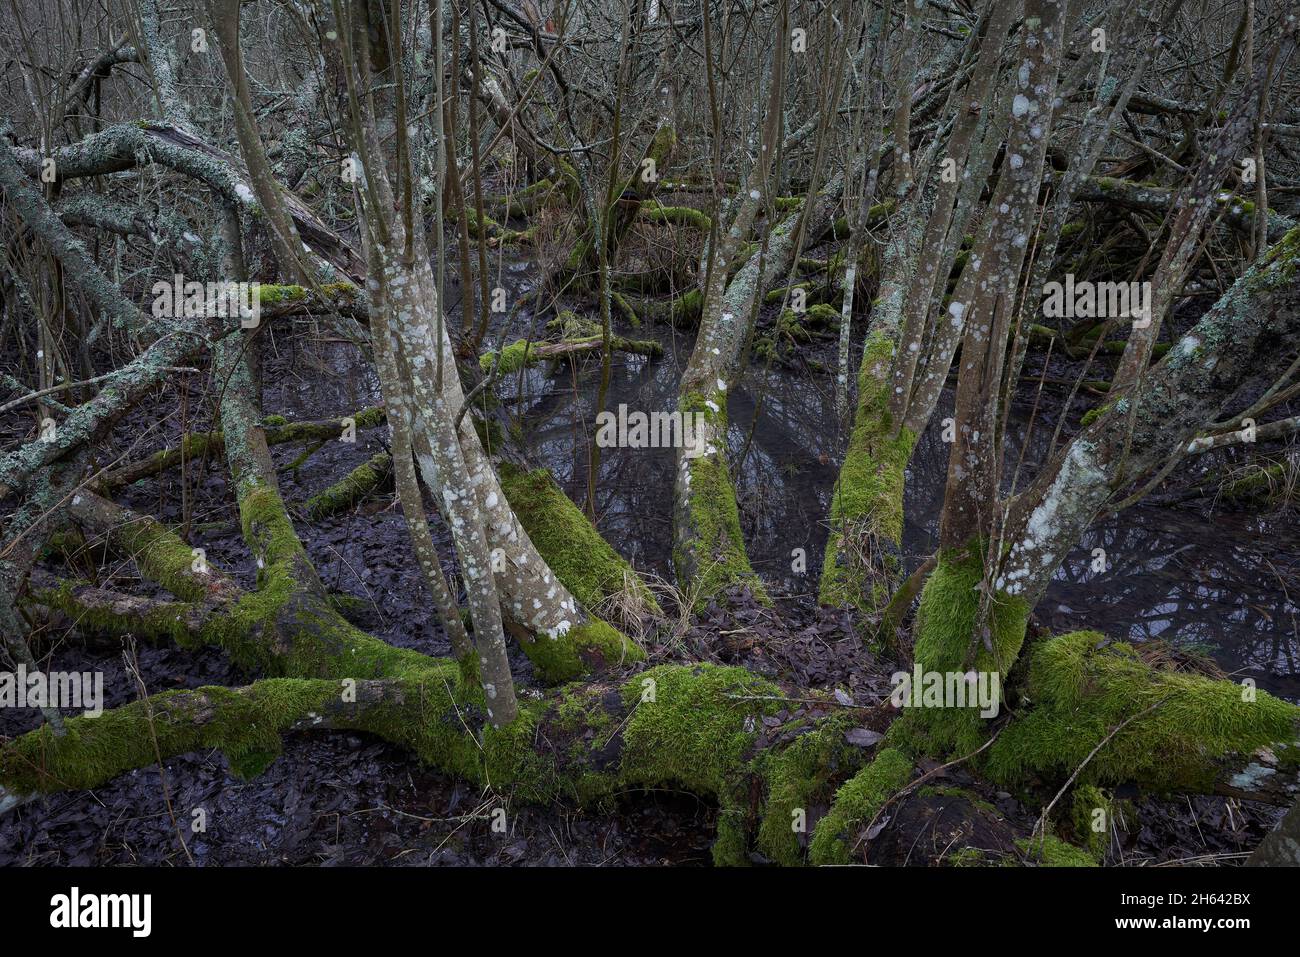 sweden,salem,bornsjön nature preserve,mosscovered willow bushes in a swamp Stock Photo